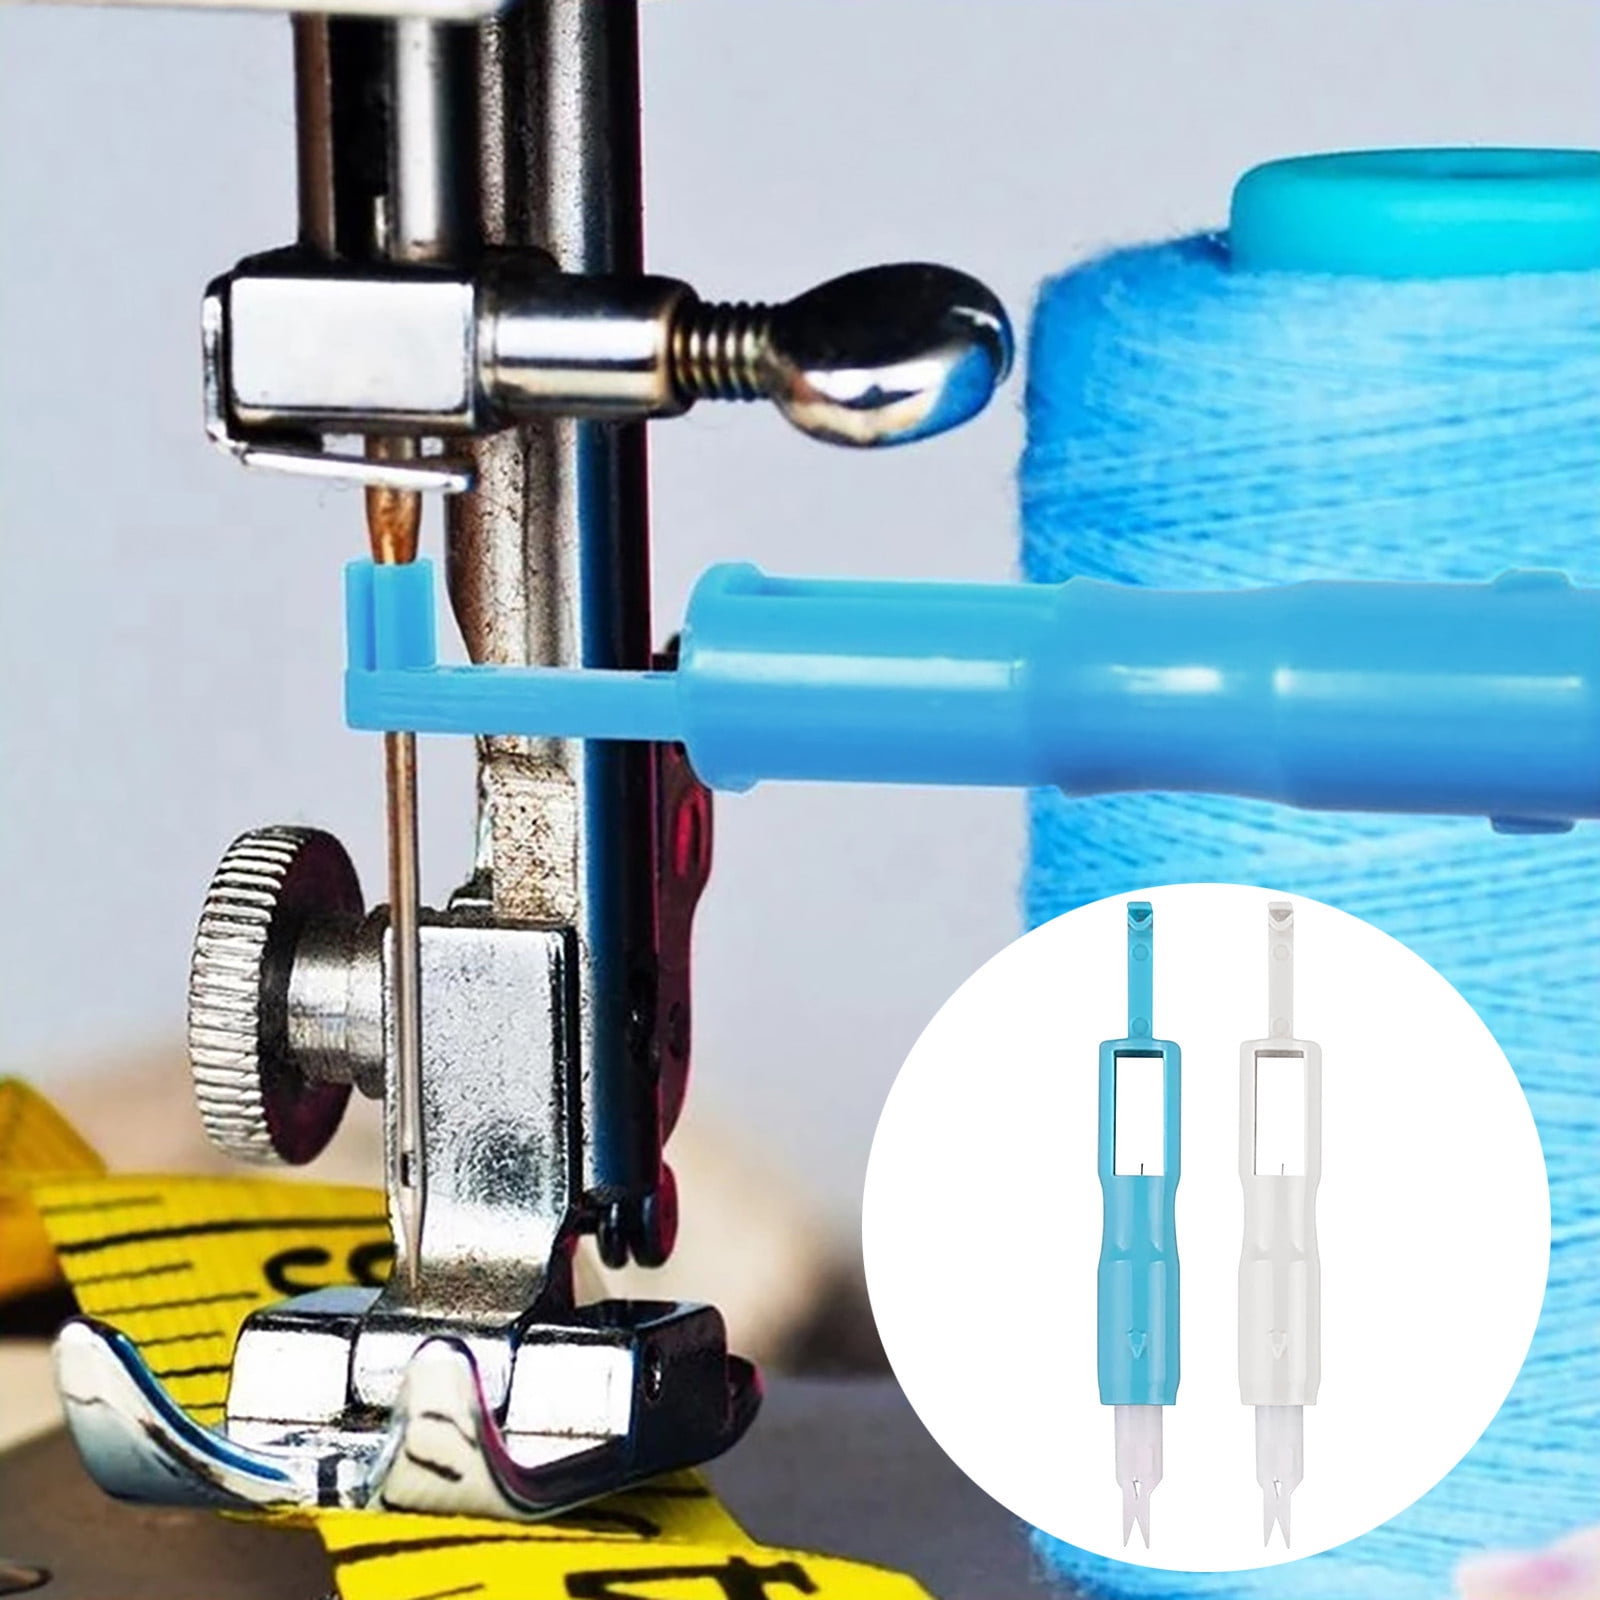 Shpwfbe For Handsewing Sewing Needles Needles Machine Sewing Useful Regular  Universal 5Pcs Big Embroidery Eye Needles Sewing Artscrafts Sewing